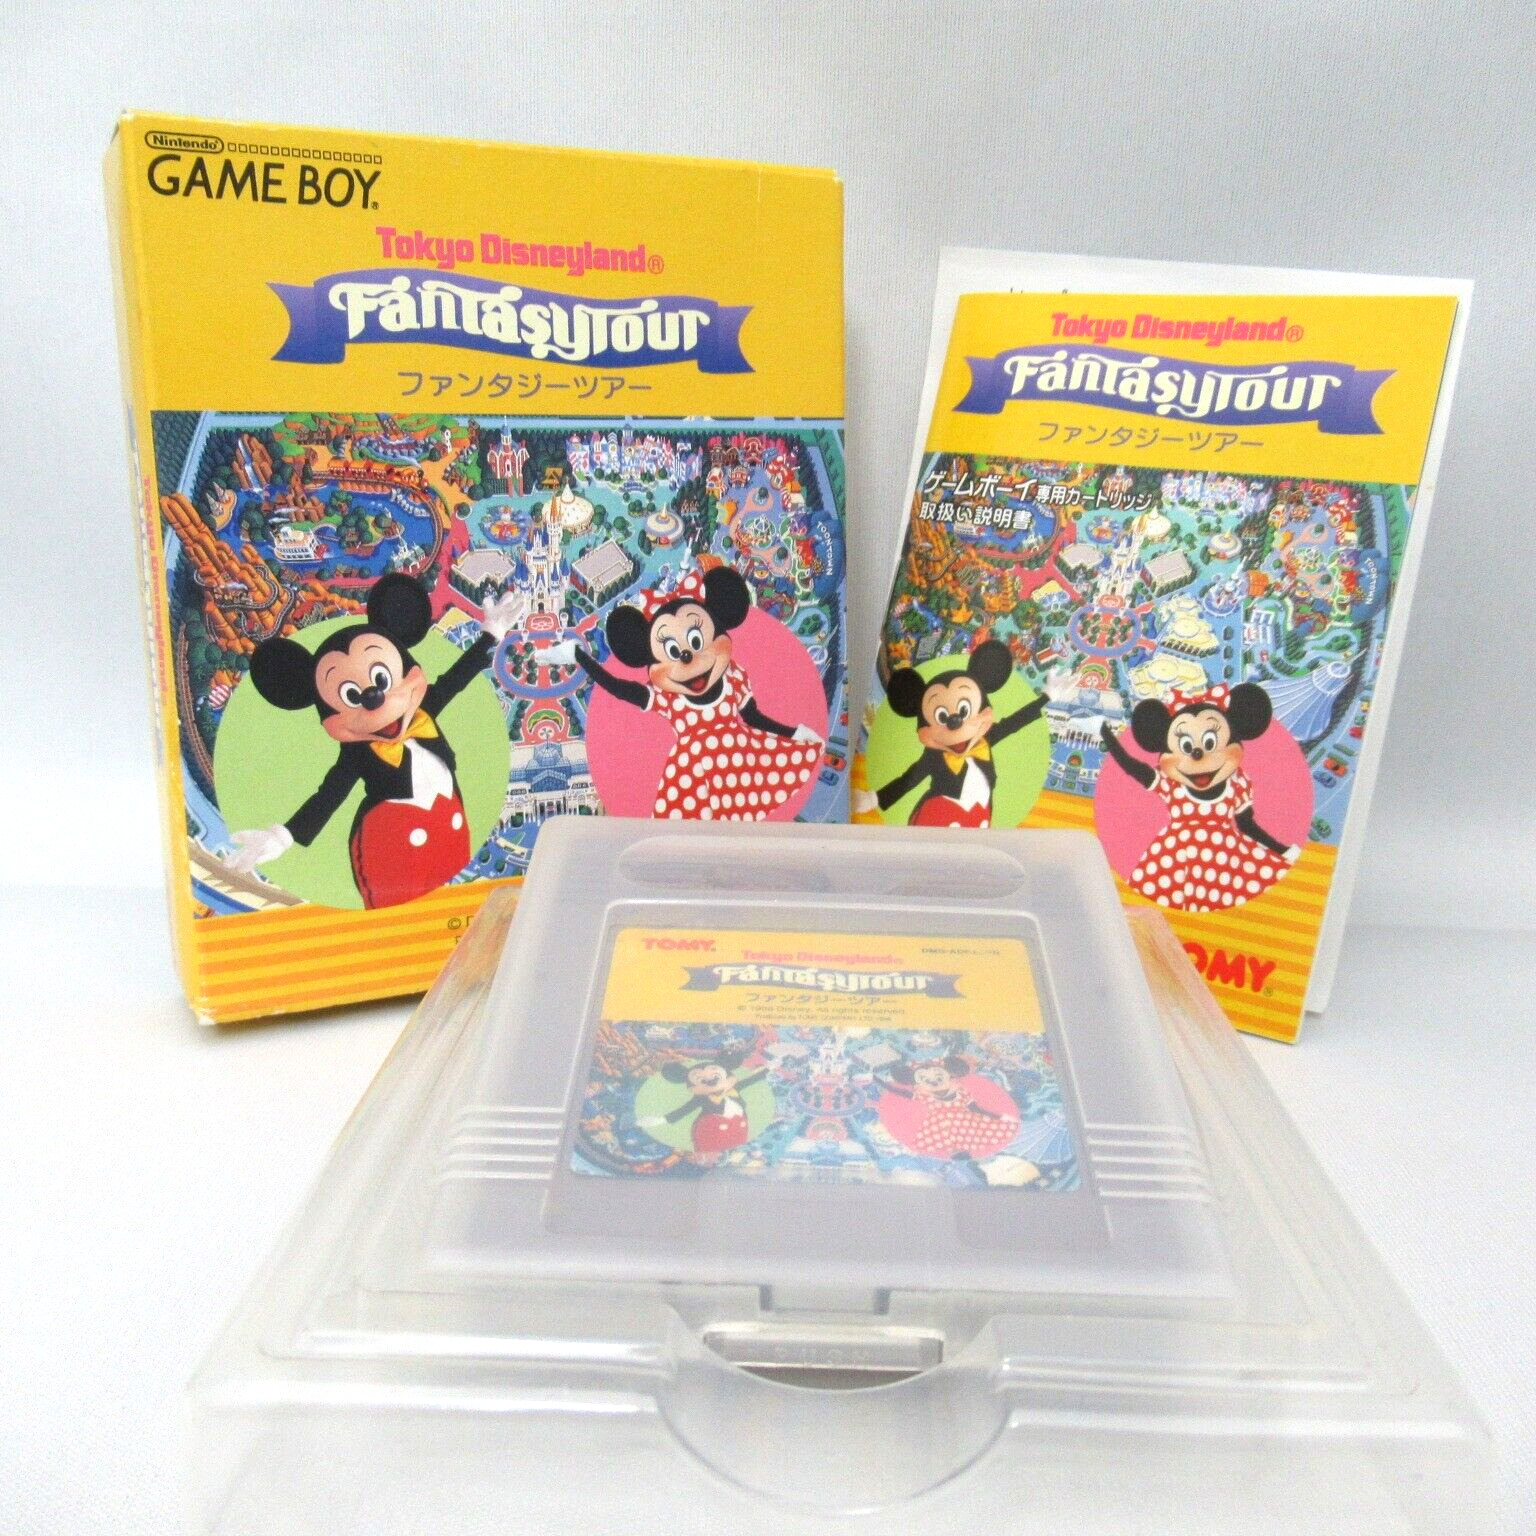 Tokyo Disneyland Fantasy Tour with Box and Manual [Nintendo Gameboy JP ver.]